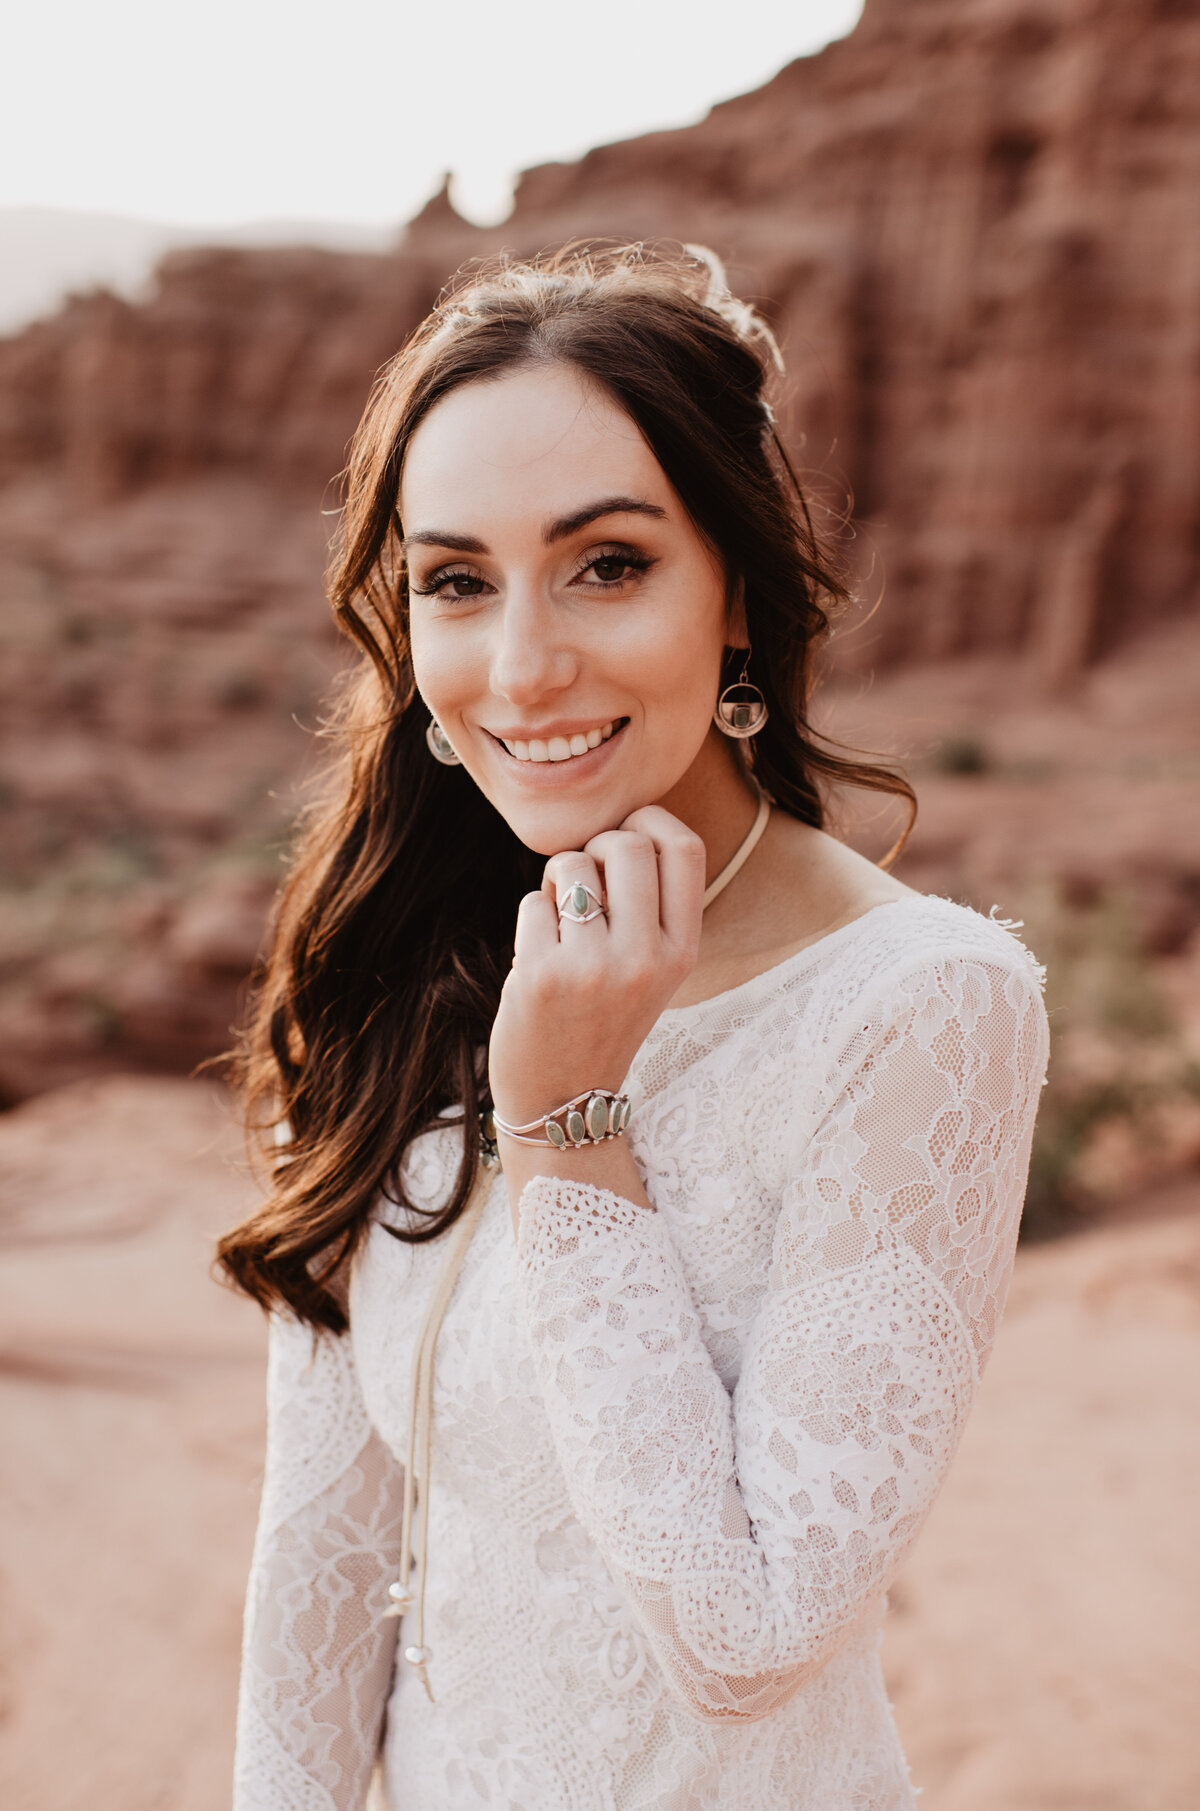 Utah Elopement Photographer captures bridal details